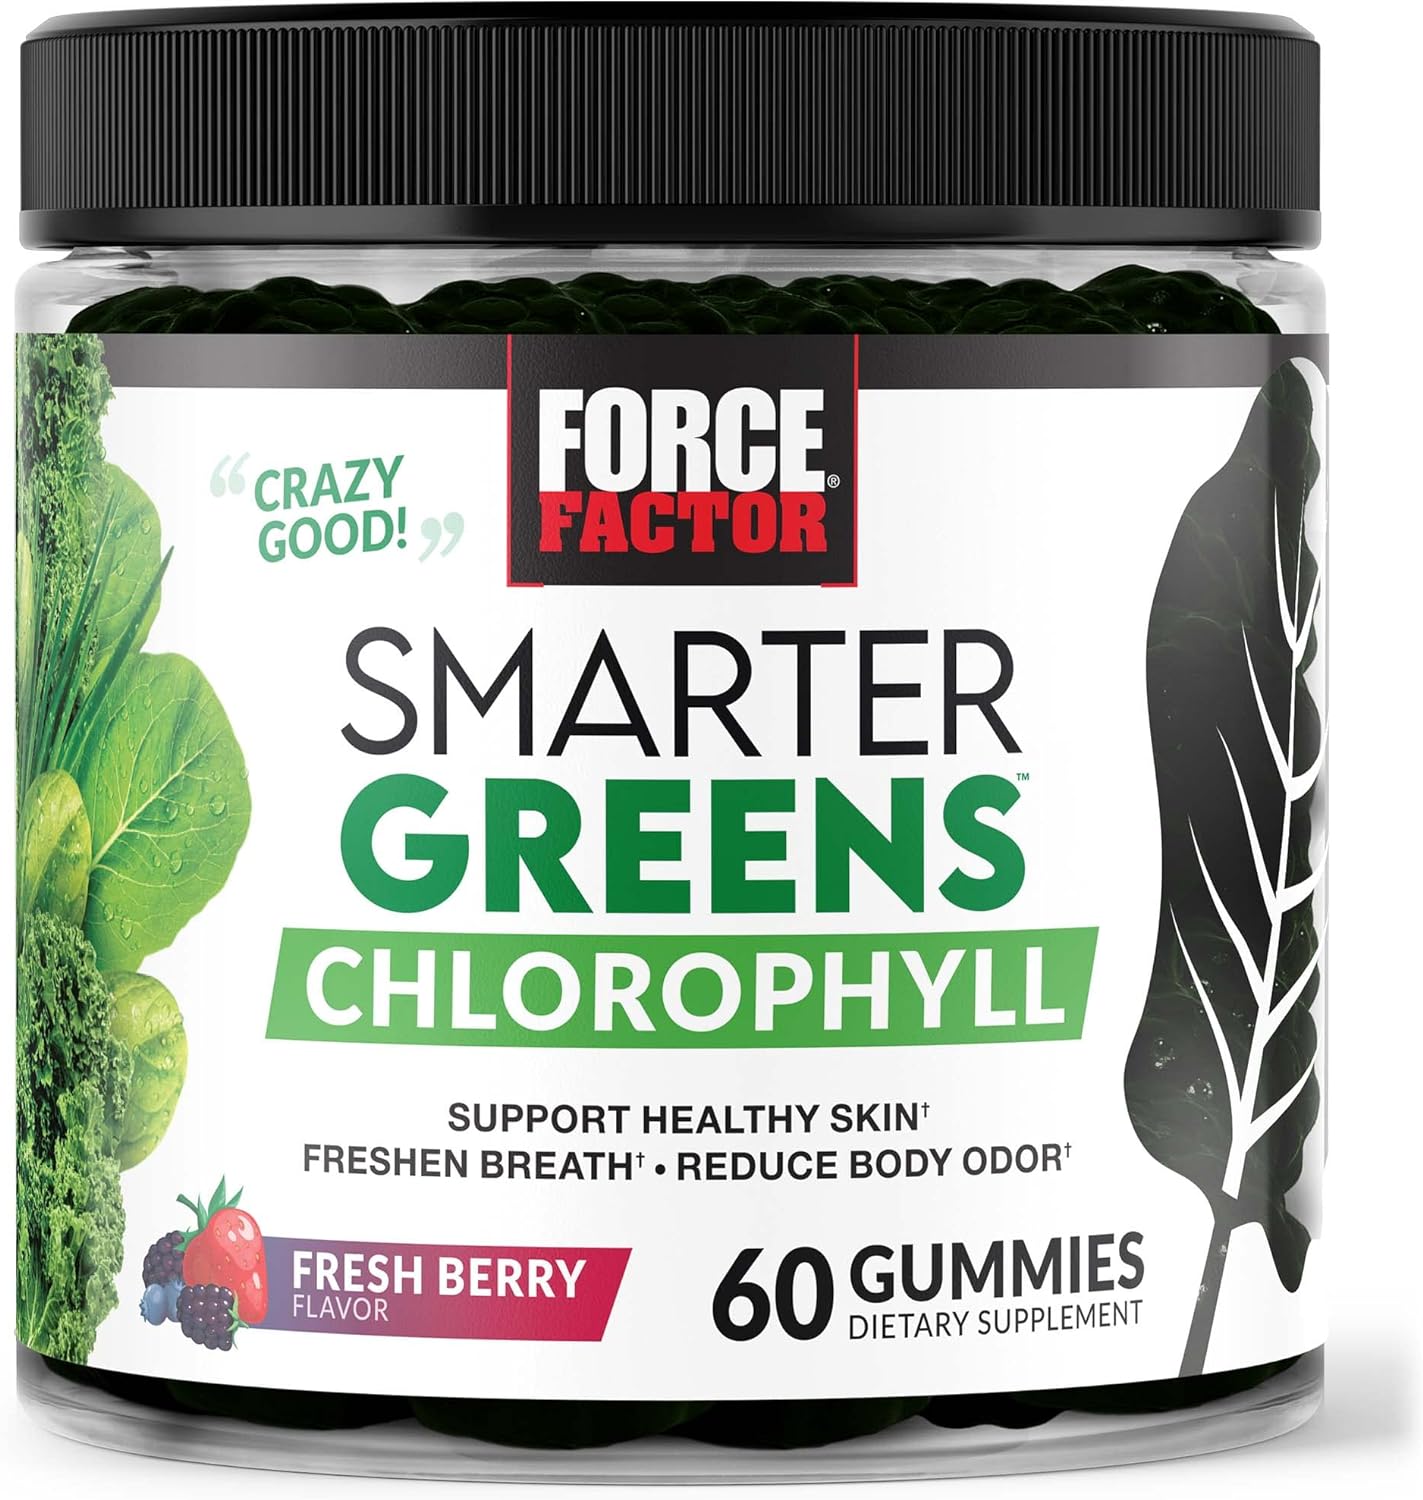 Force Factor Smarter Greens Chlorophyll Gummies 60ct